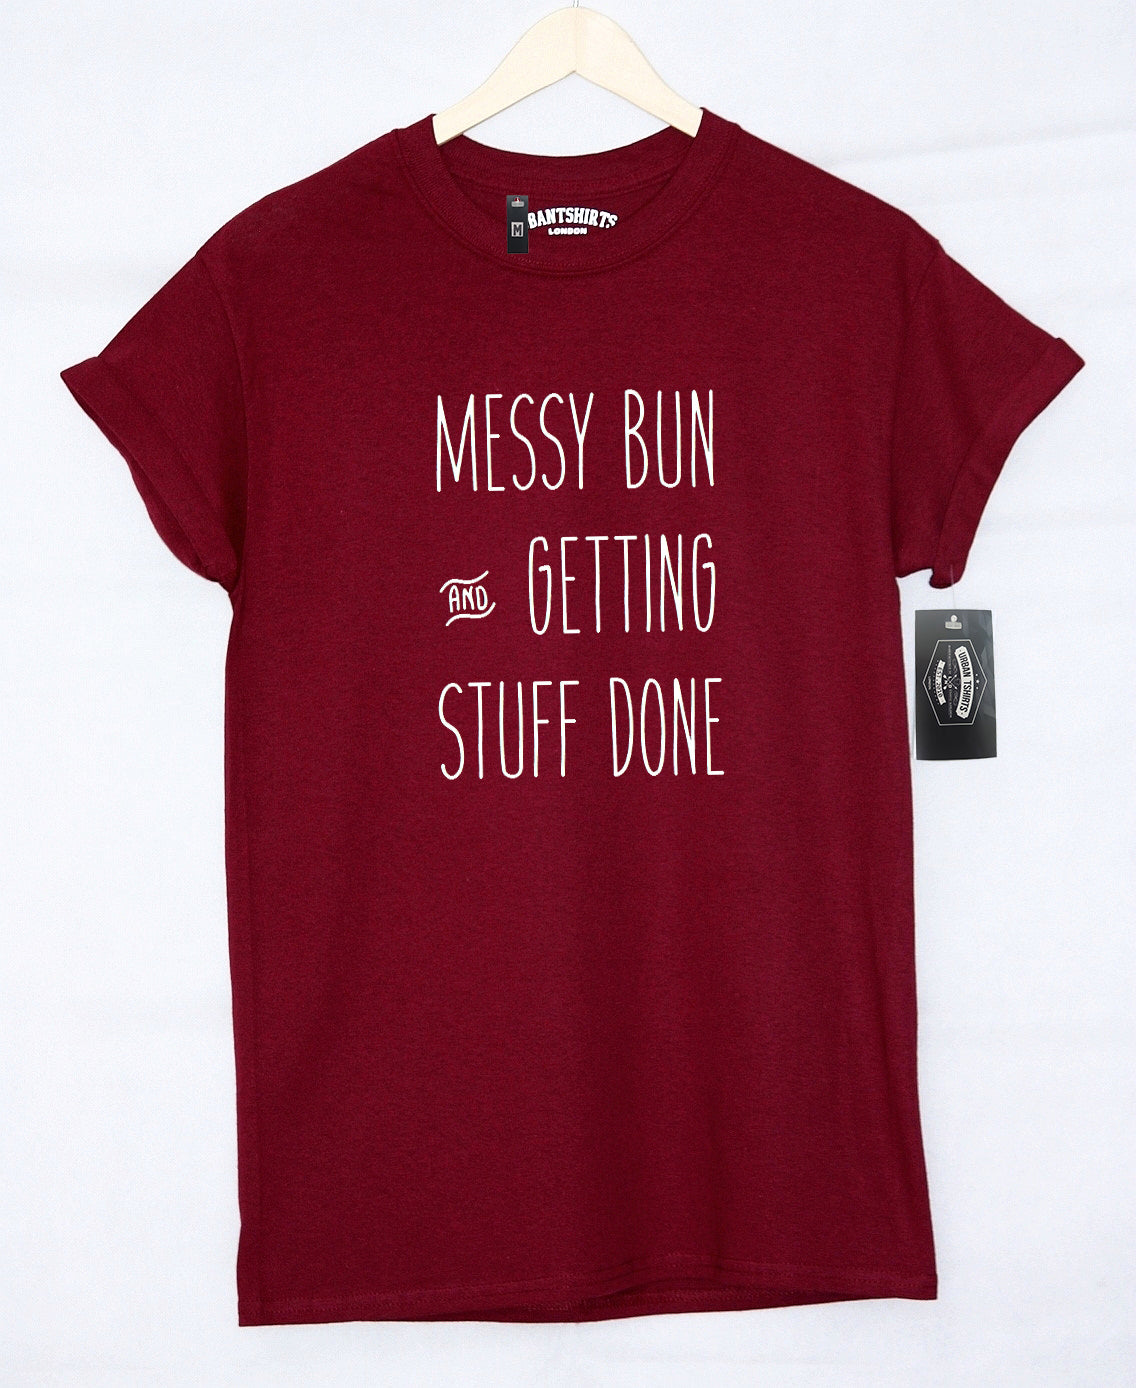 Messy bun and getting stuff done T-shirt - Urbantshirts.co.uk